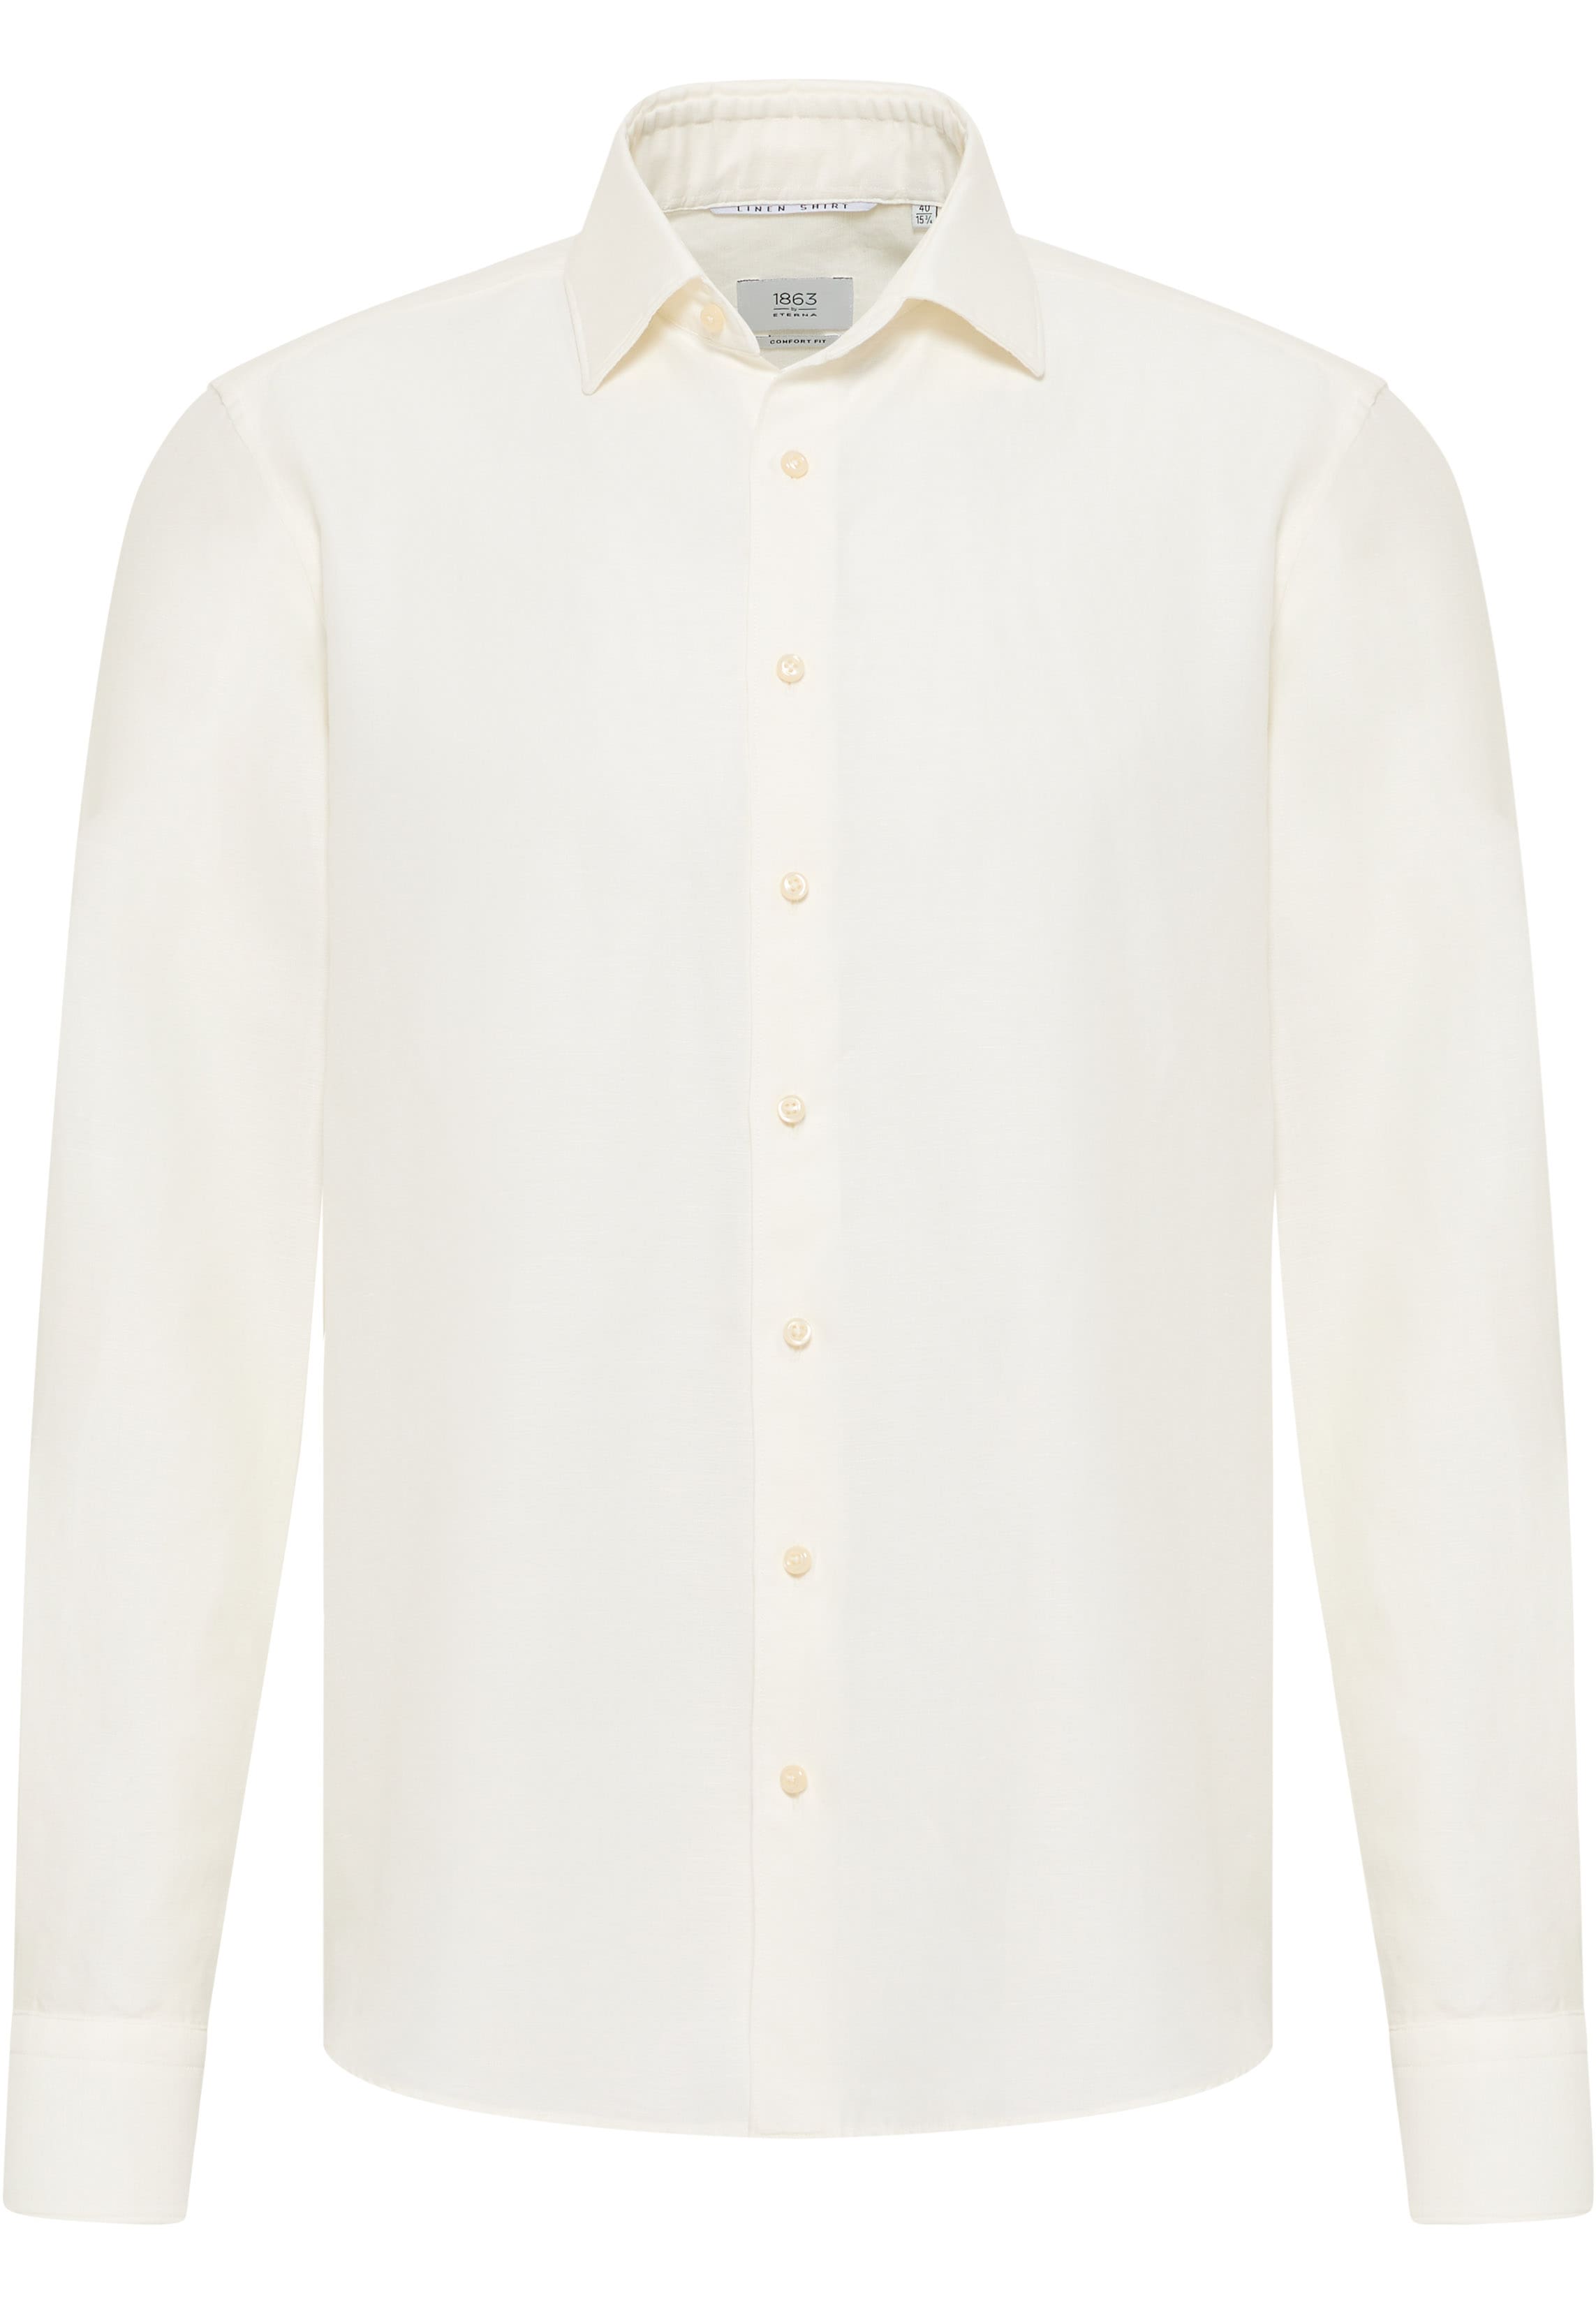 COMFORT FIT Linen Shirt in champagne plain